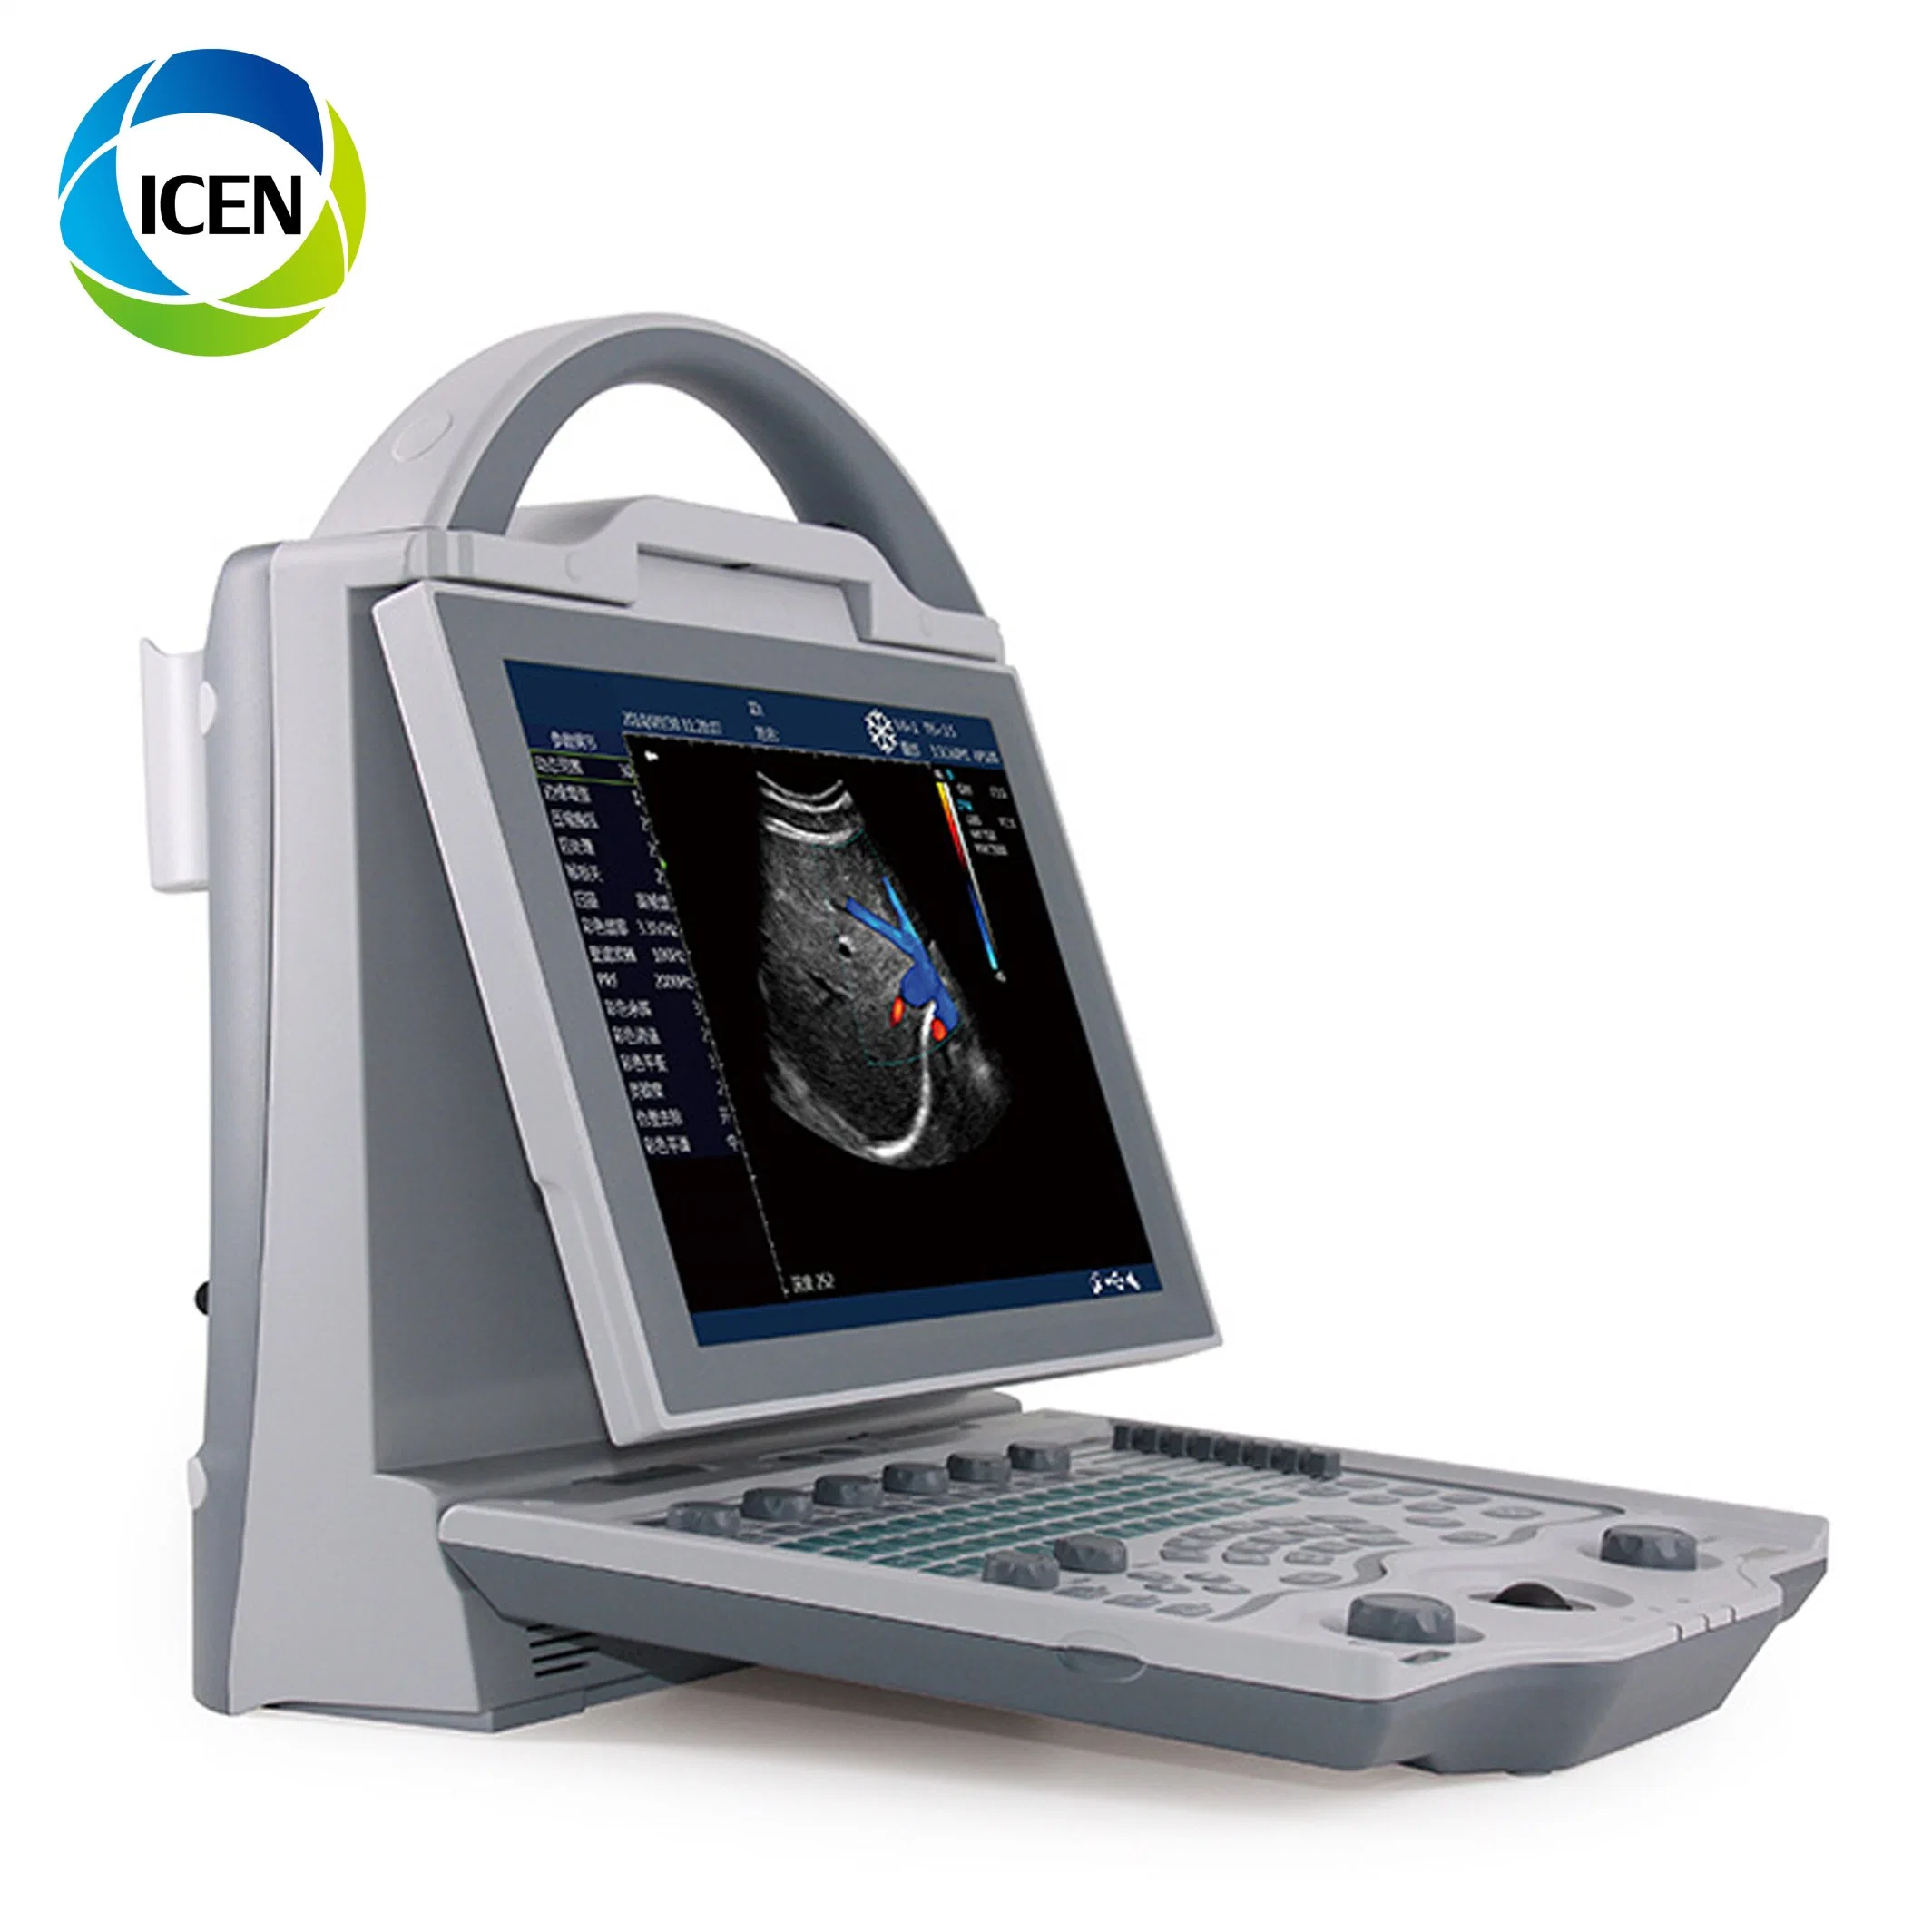 IN-A12 Medical Doppler portable digital clinical pregnancy diagnostic ultrasound scanner